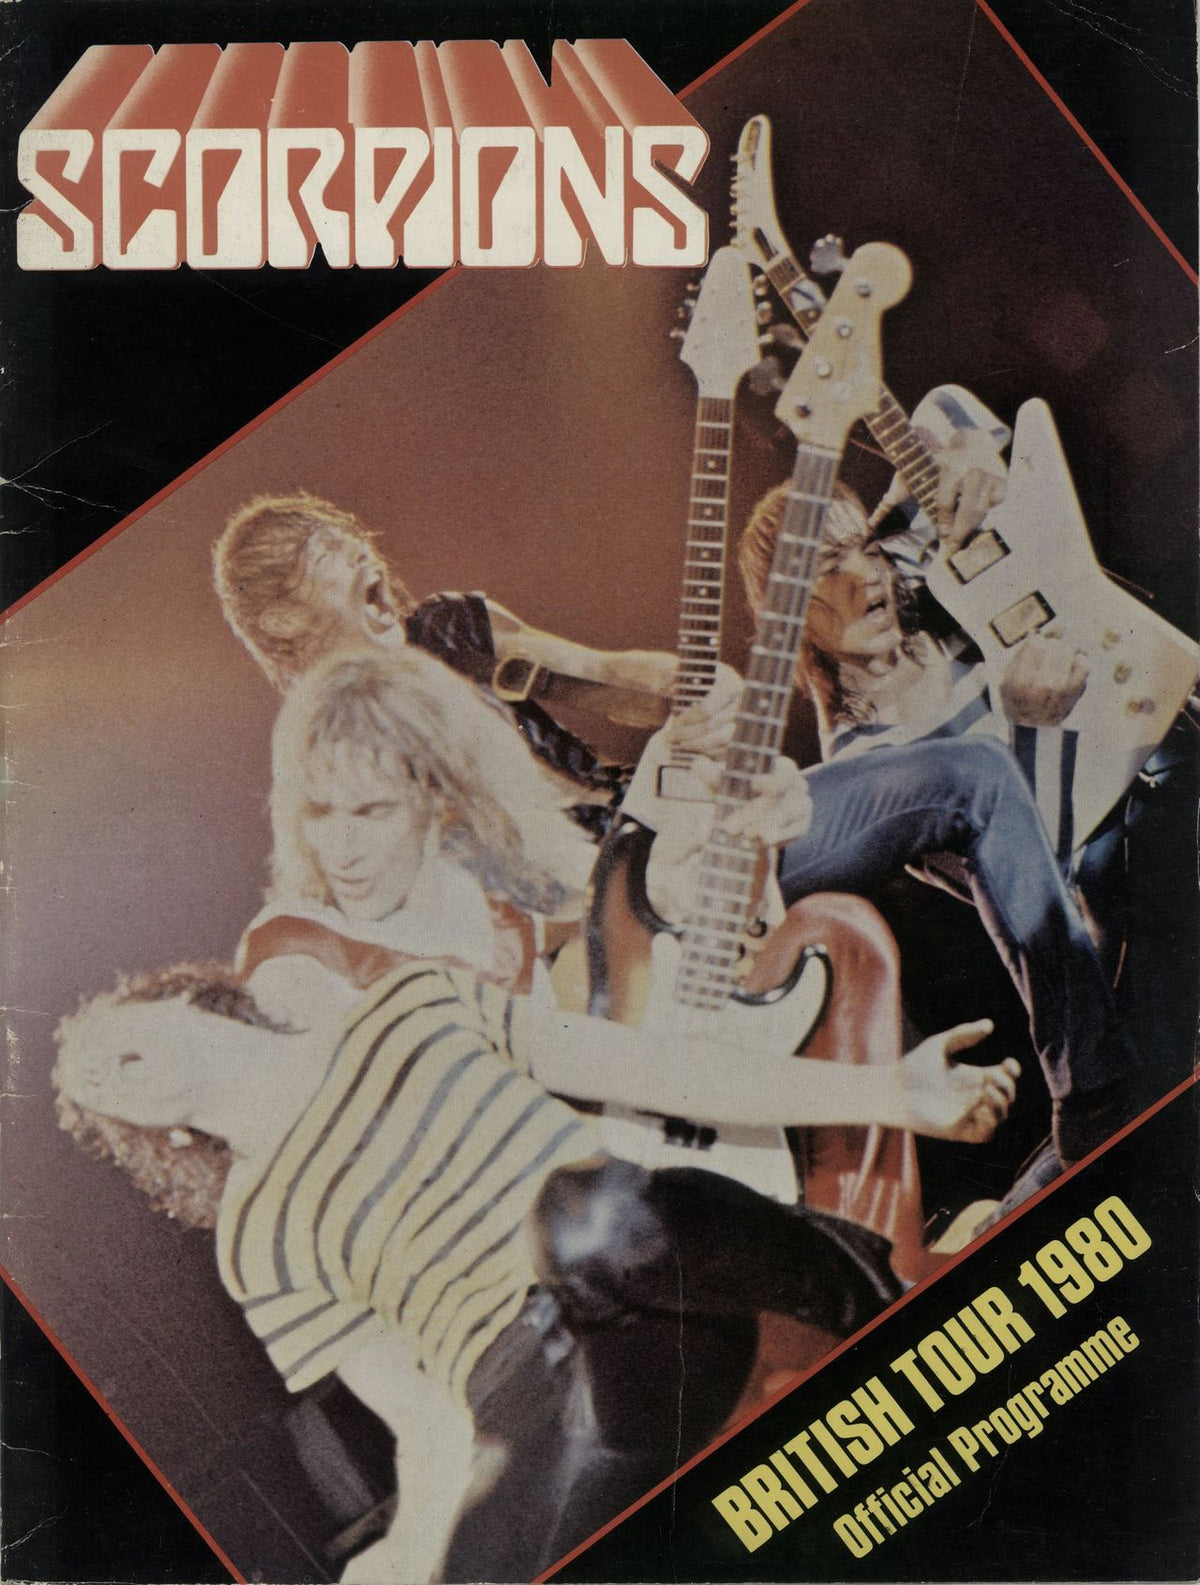 scorpions tour dates 1980